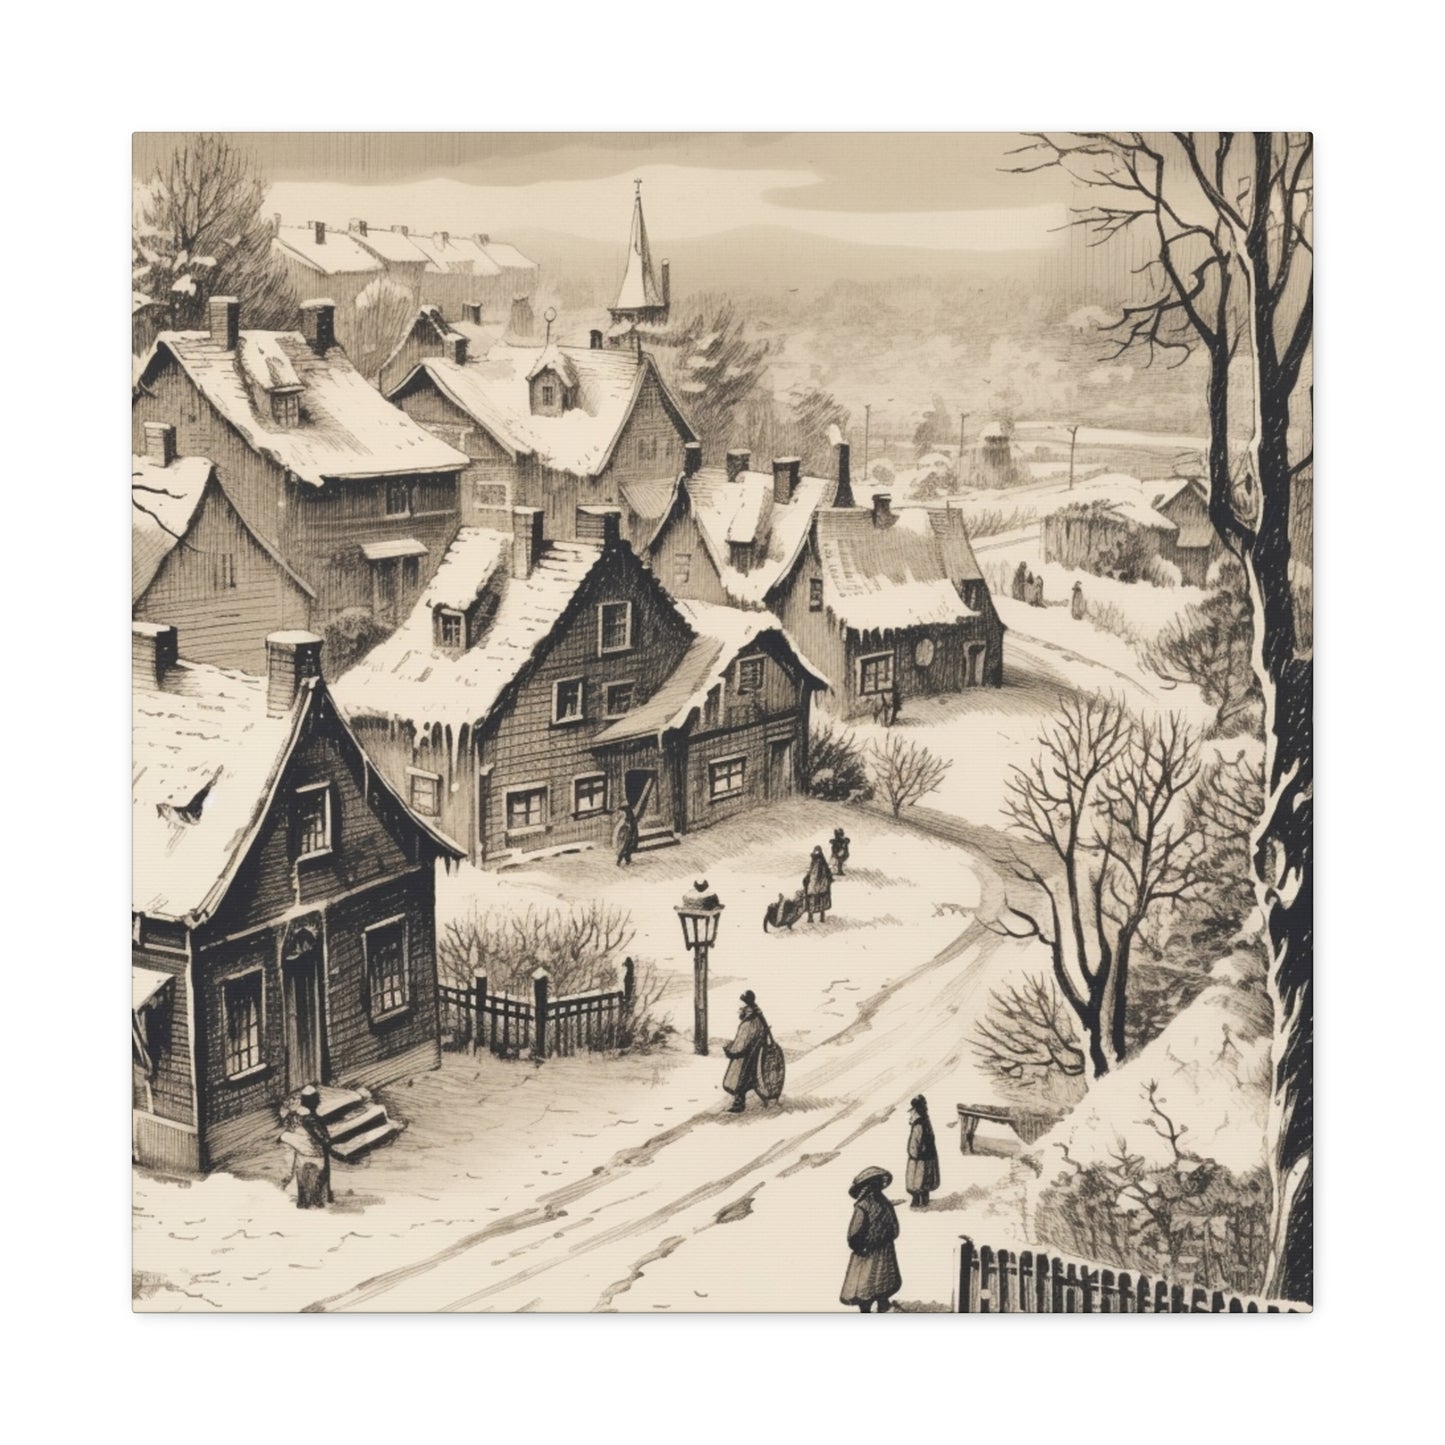 Nostalgic winter landscape drawing on canvas